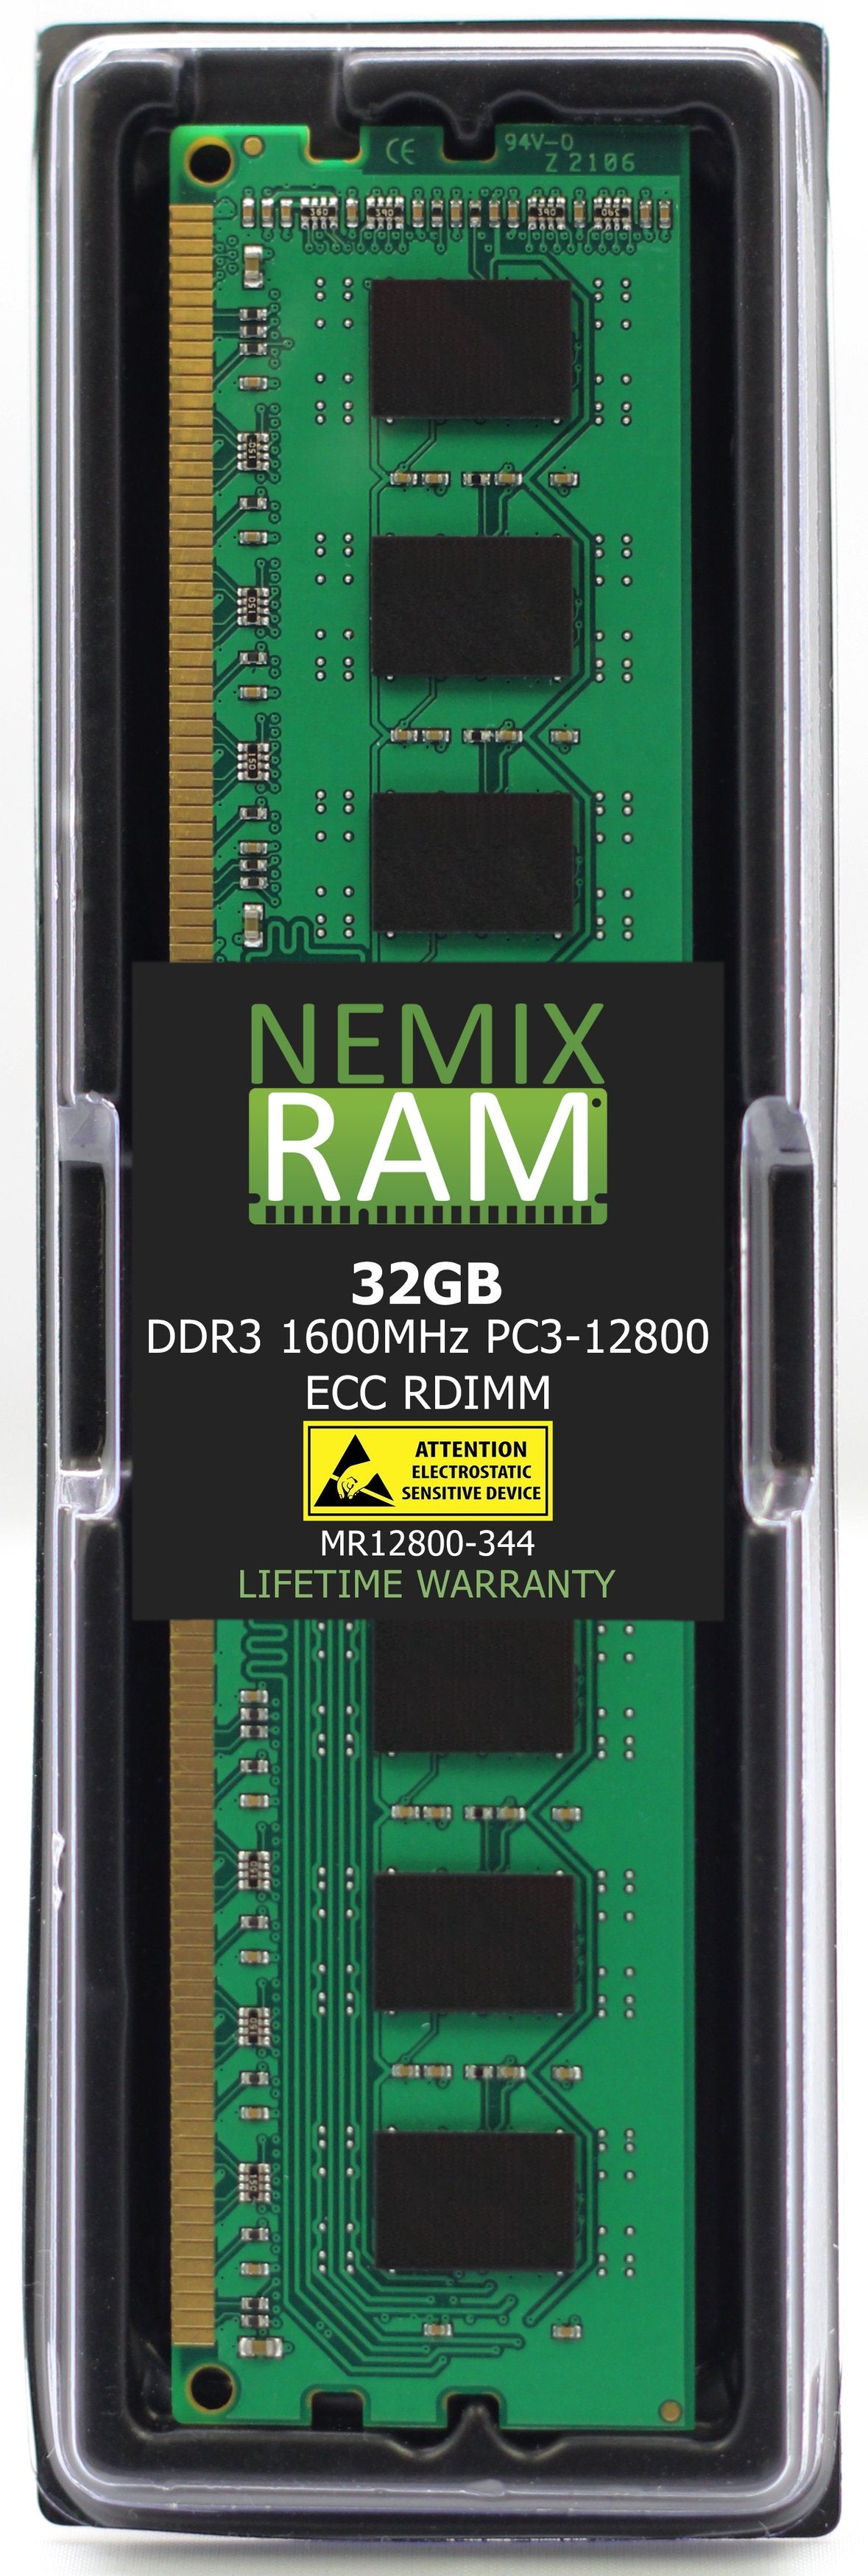 Hynix HMT84GR7BMR4C-PB 32GB DDR3 1600MHZ PC3-12800 RDIMM Compatible Memory Module